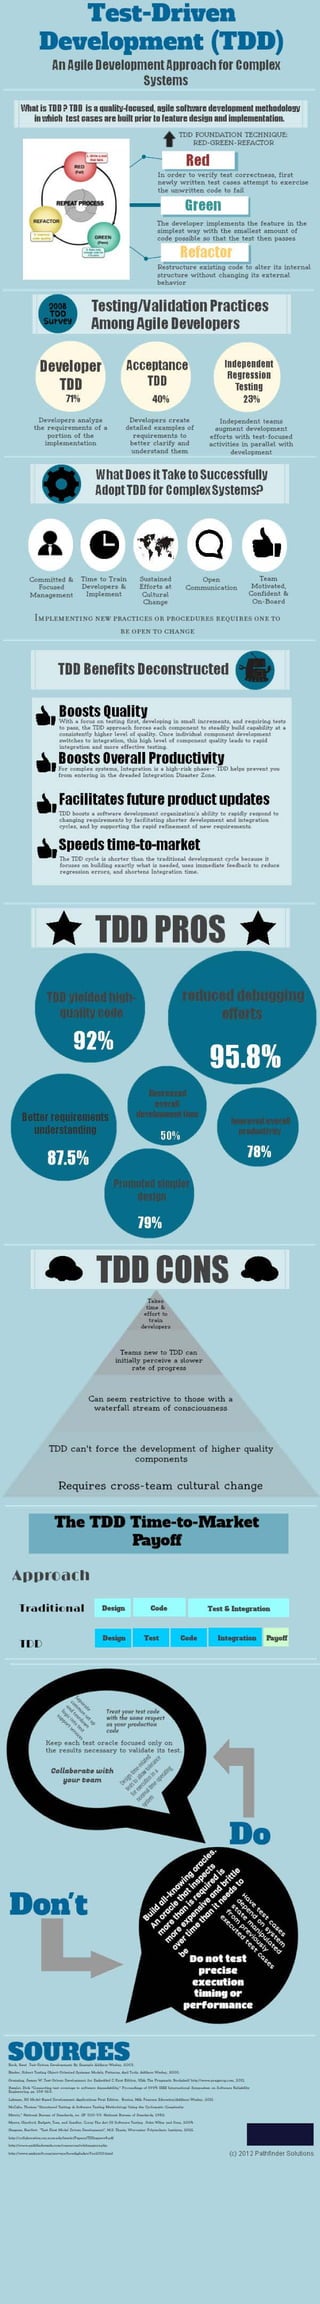 Test-Driven Development (TDD) Infographic